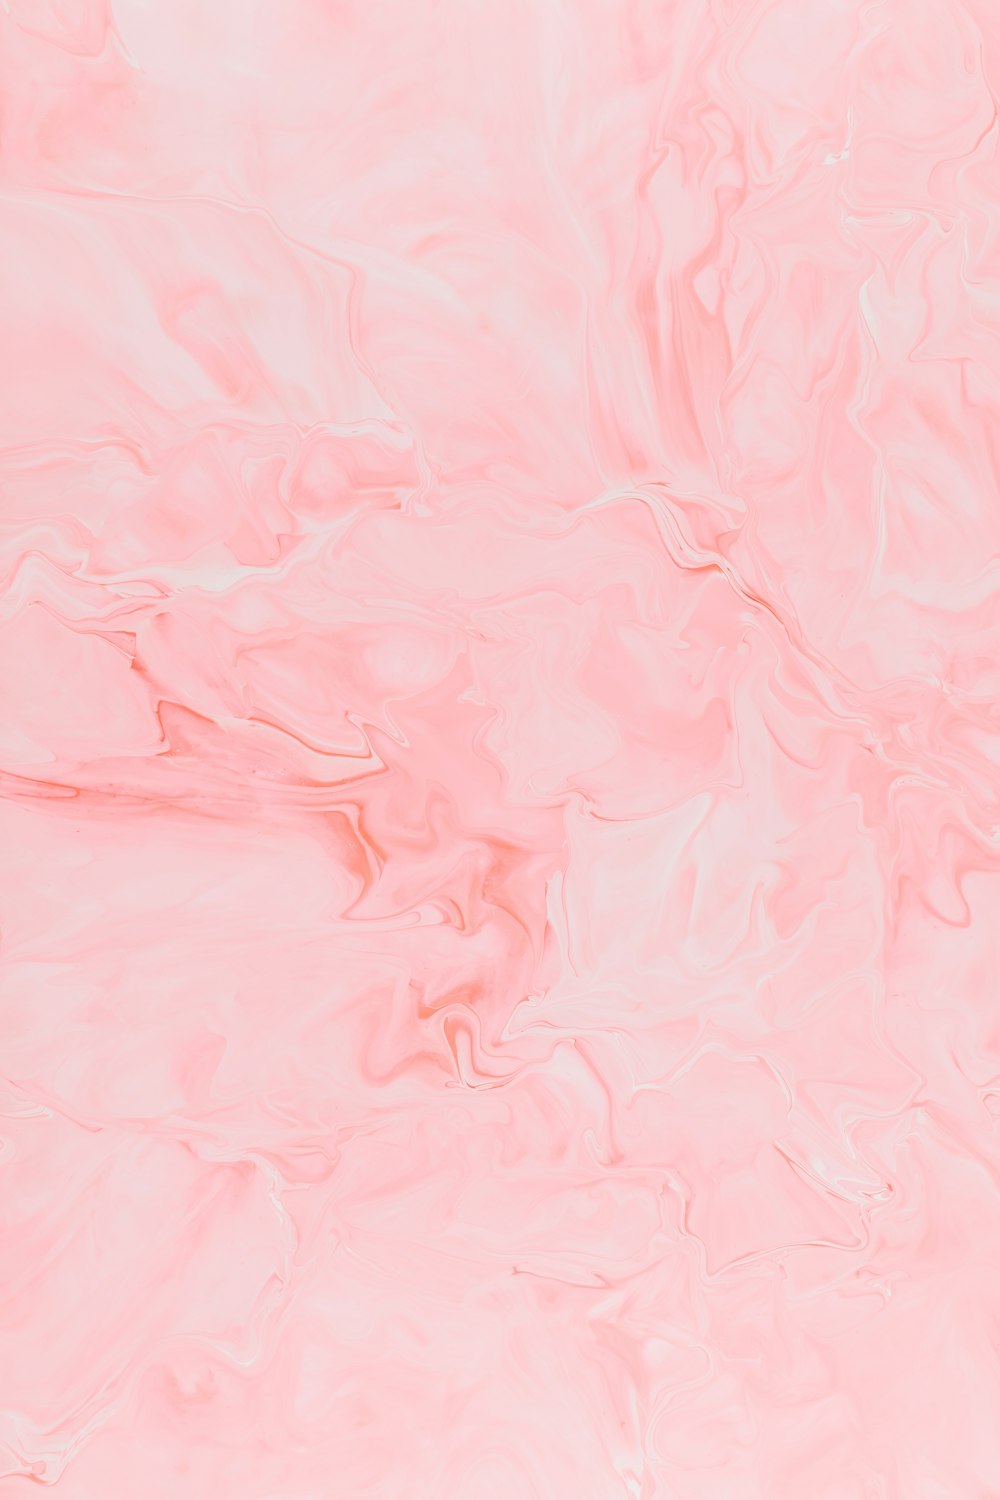 Pink Wallpapers: Descarga gratuita en HD [500+ HQ] | Unsplash